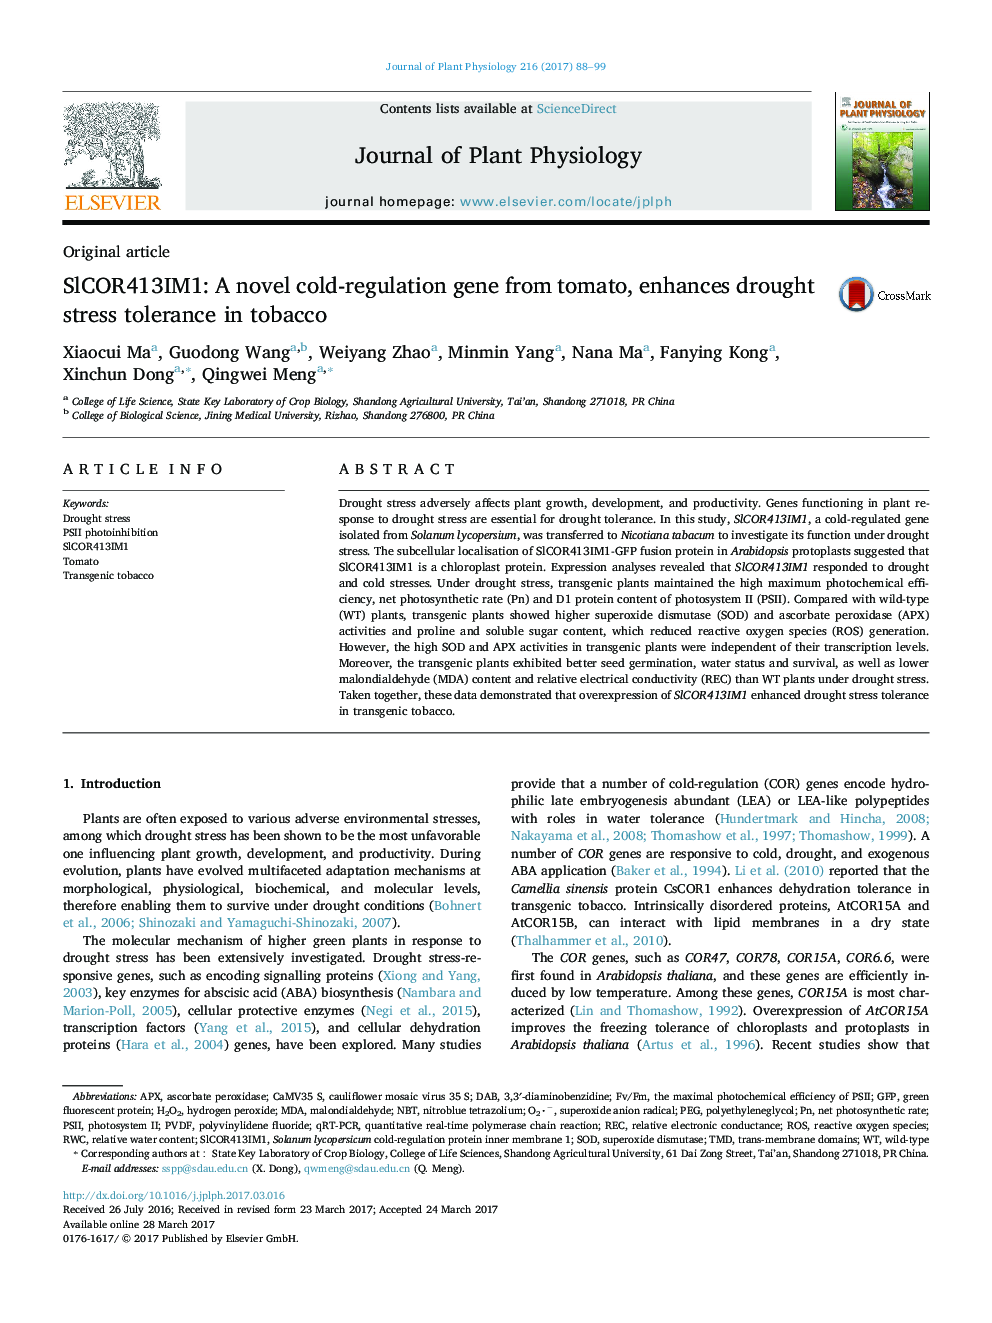 Original articleSlCOR413IM1: A novel cold-regulation gene from tomato, enhances drought stress tolerance in tobacco